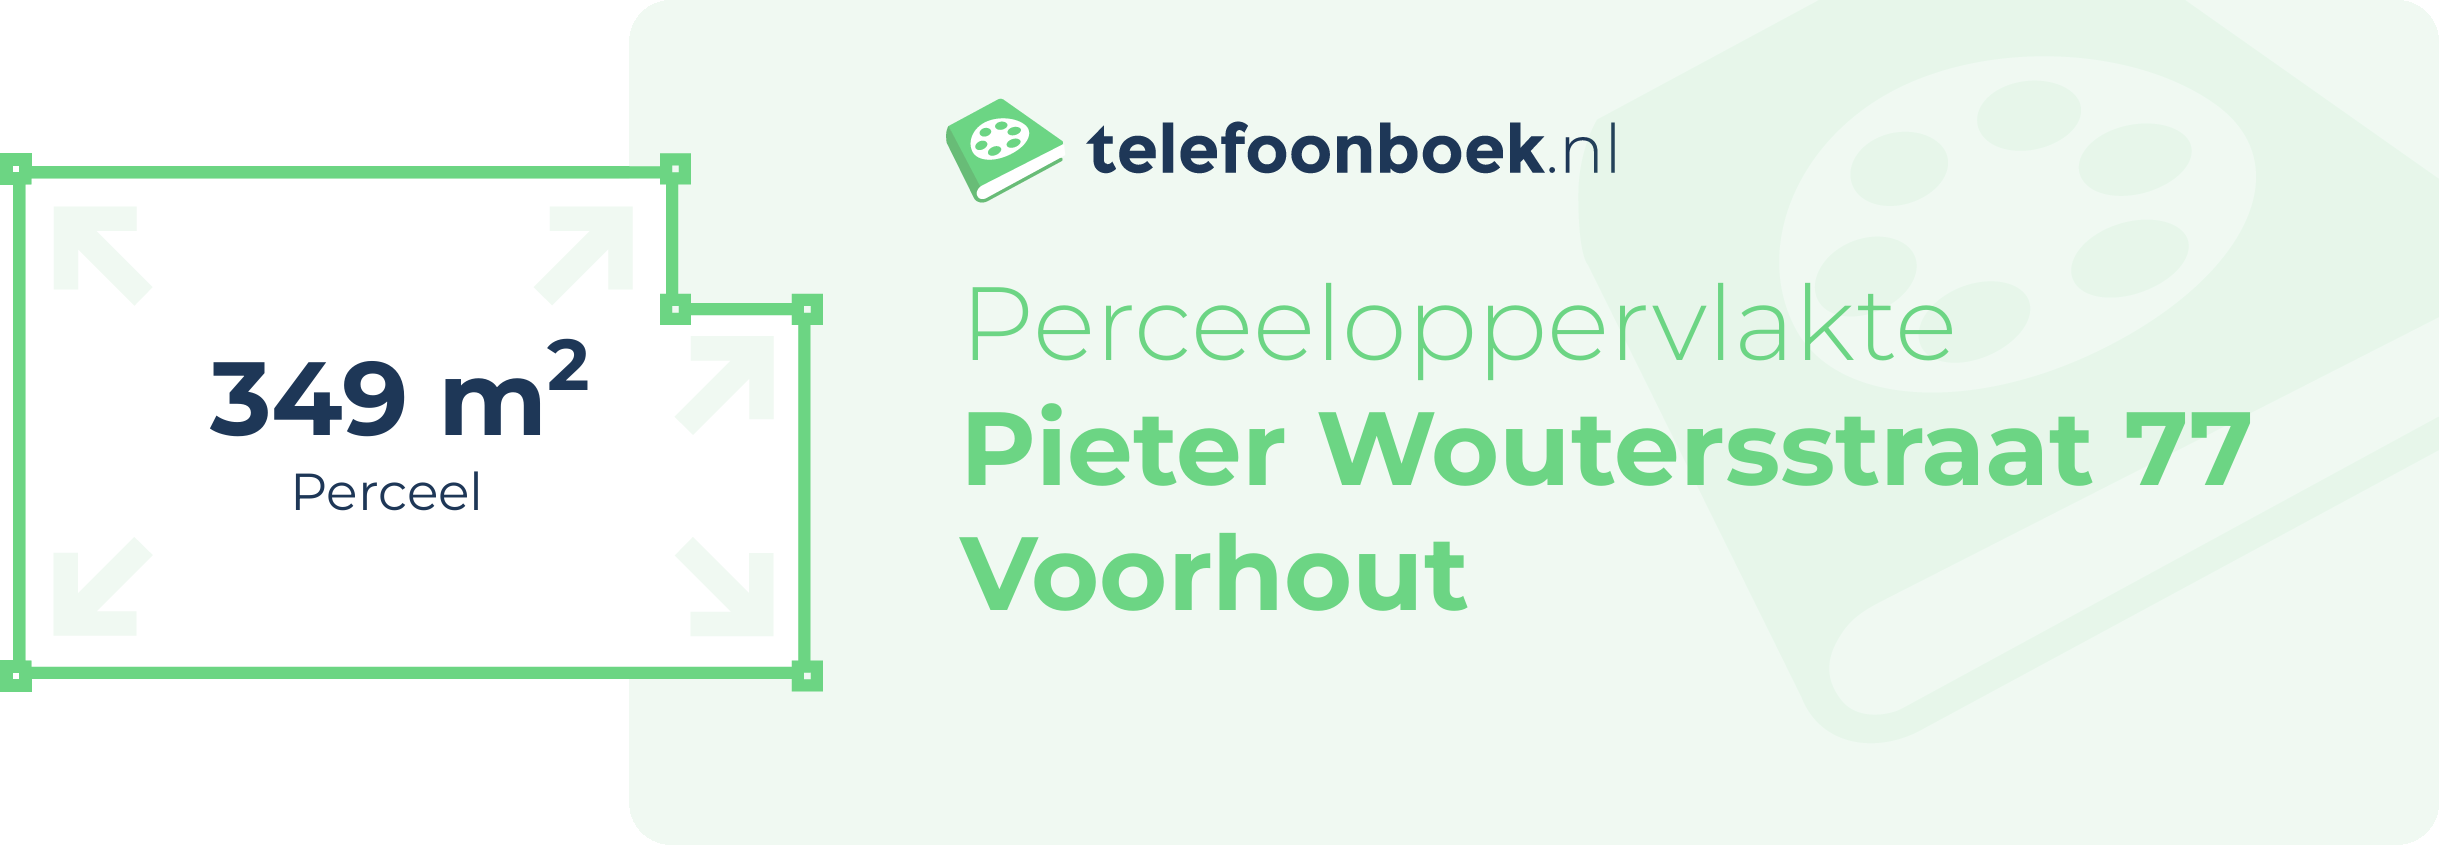 Perceeloppervlakte Pieter Woutersstraat 77 Voorhout